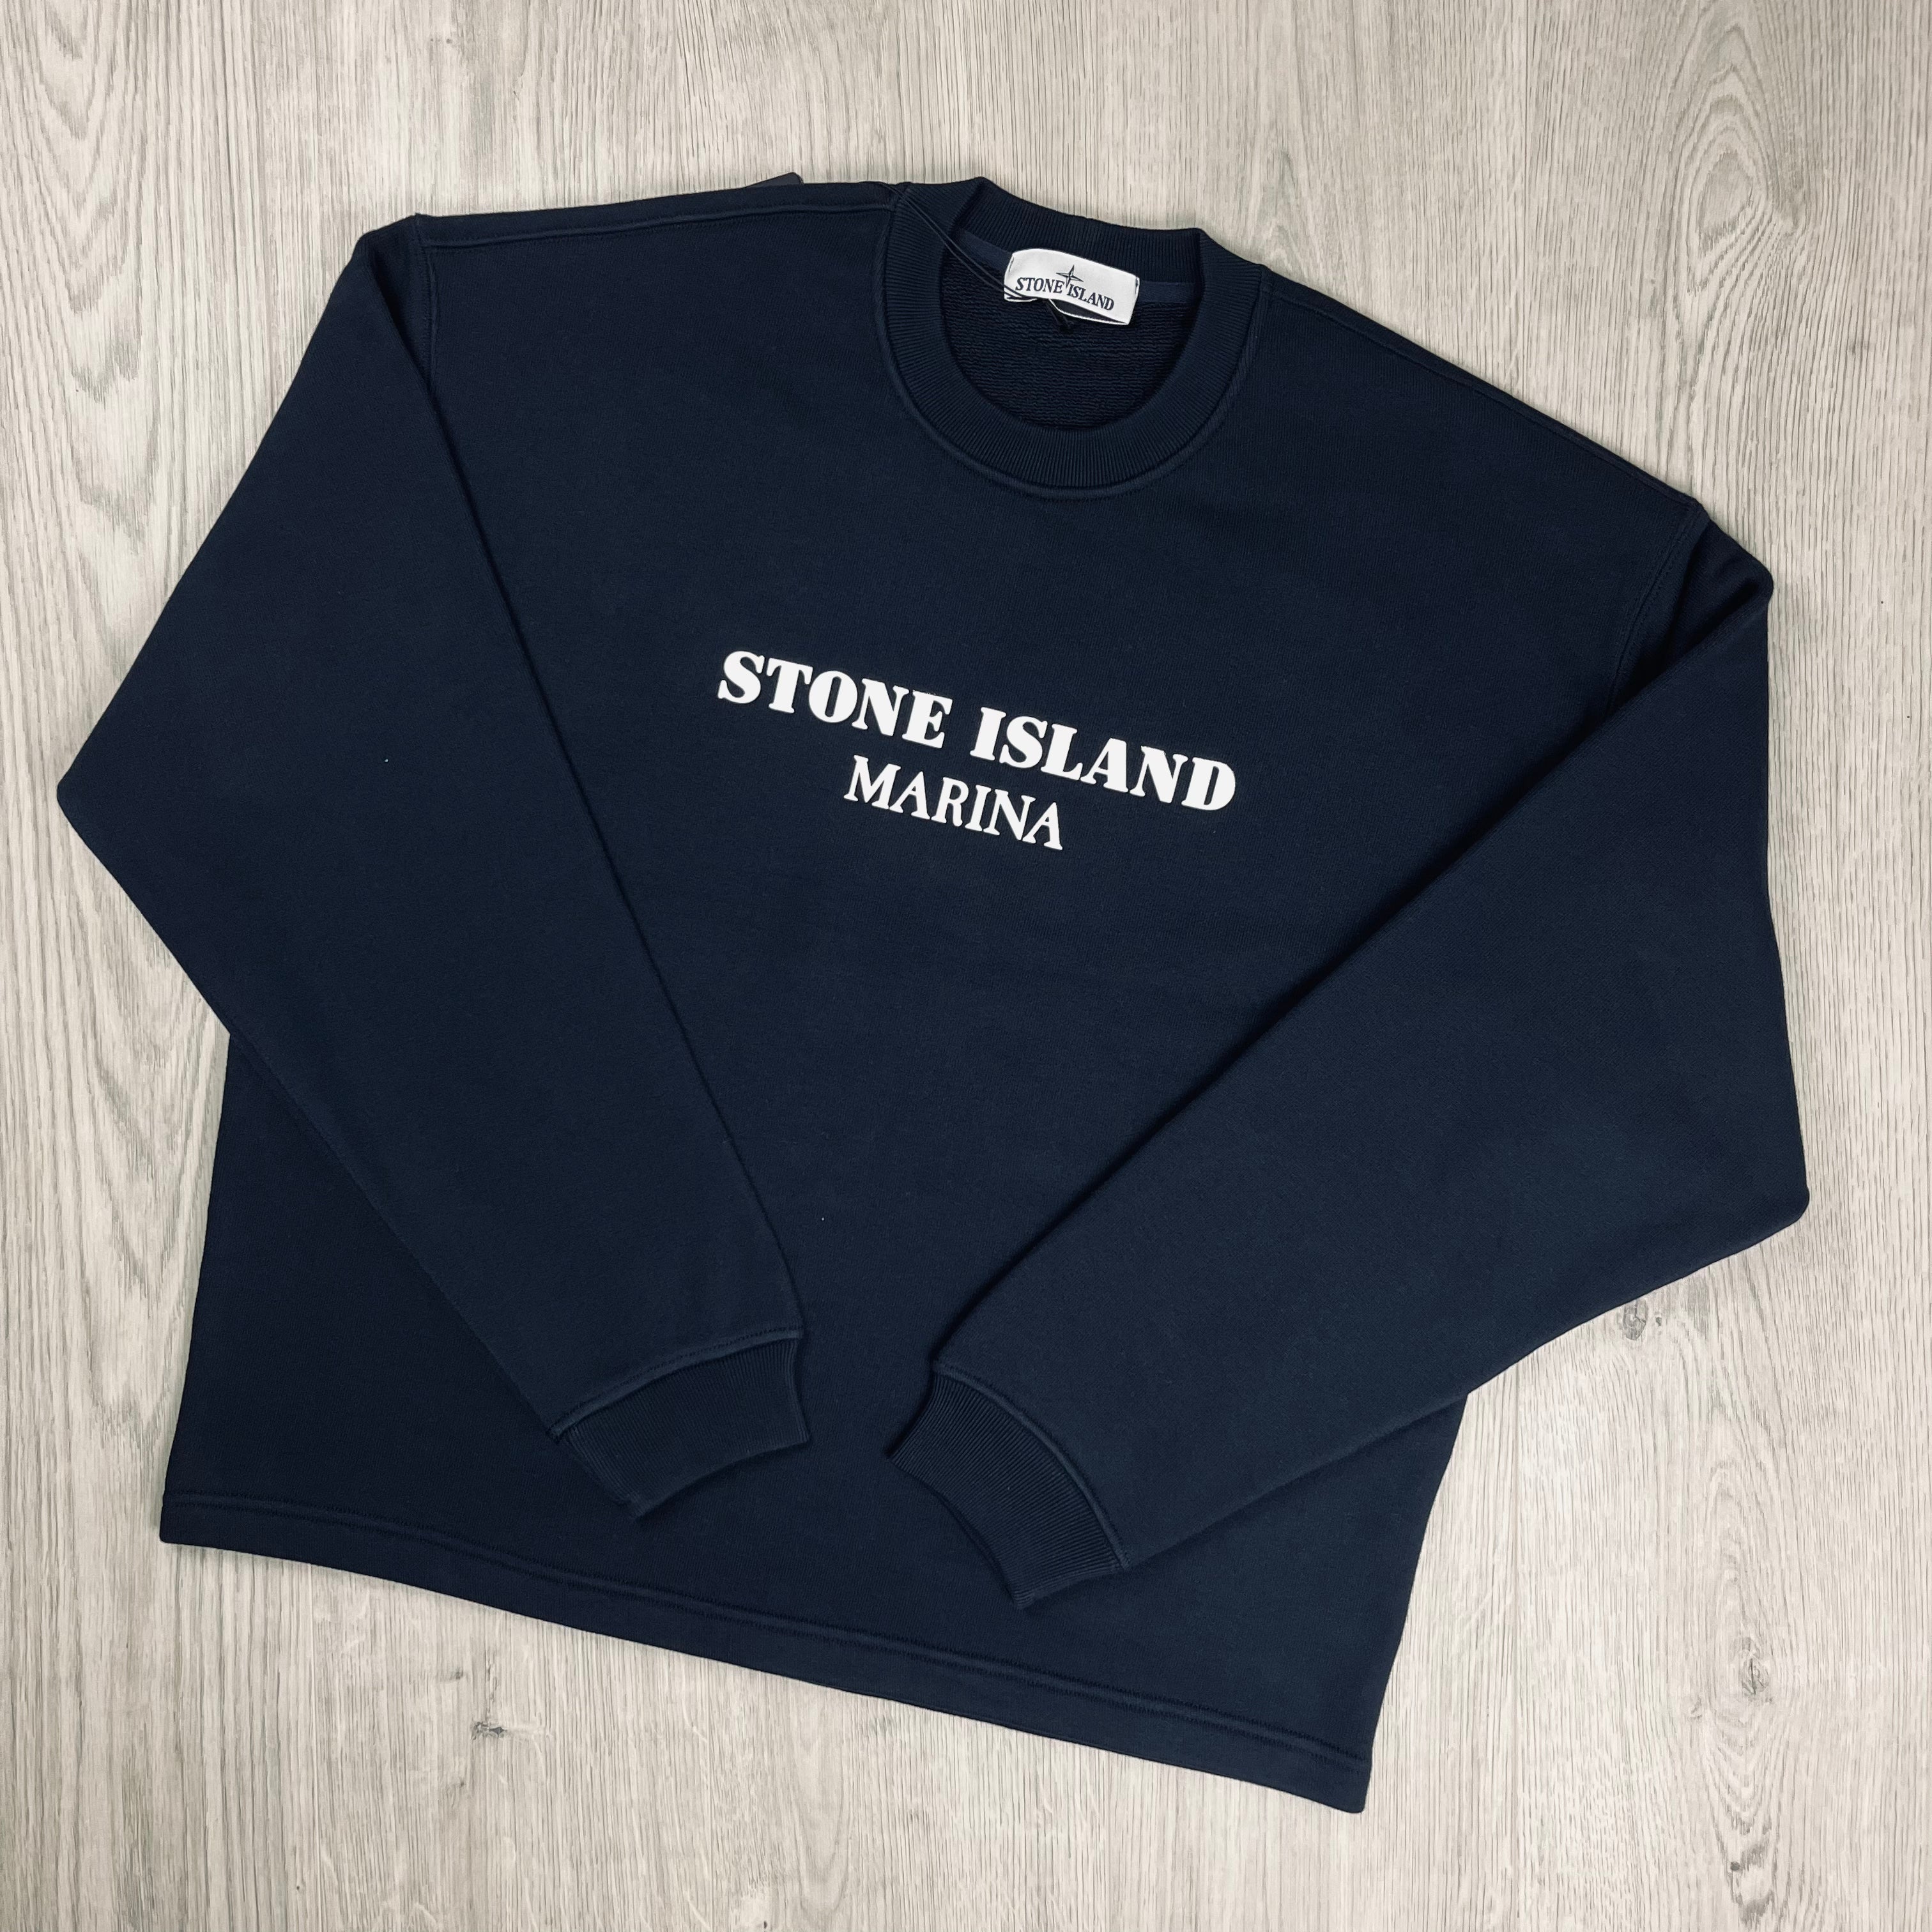 Stone Island Marina Oversized Sweatshirt